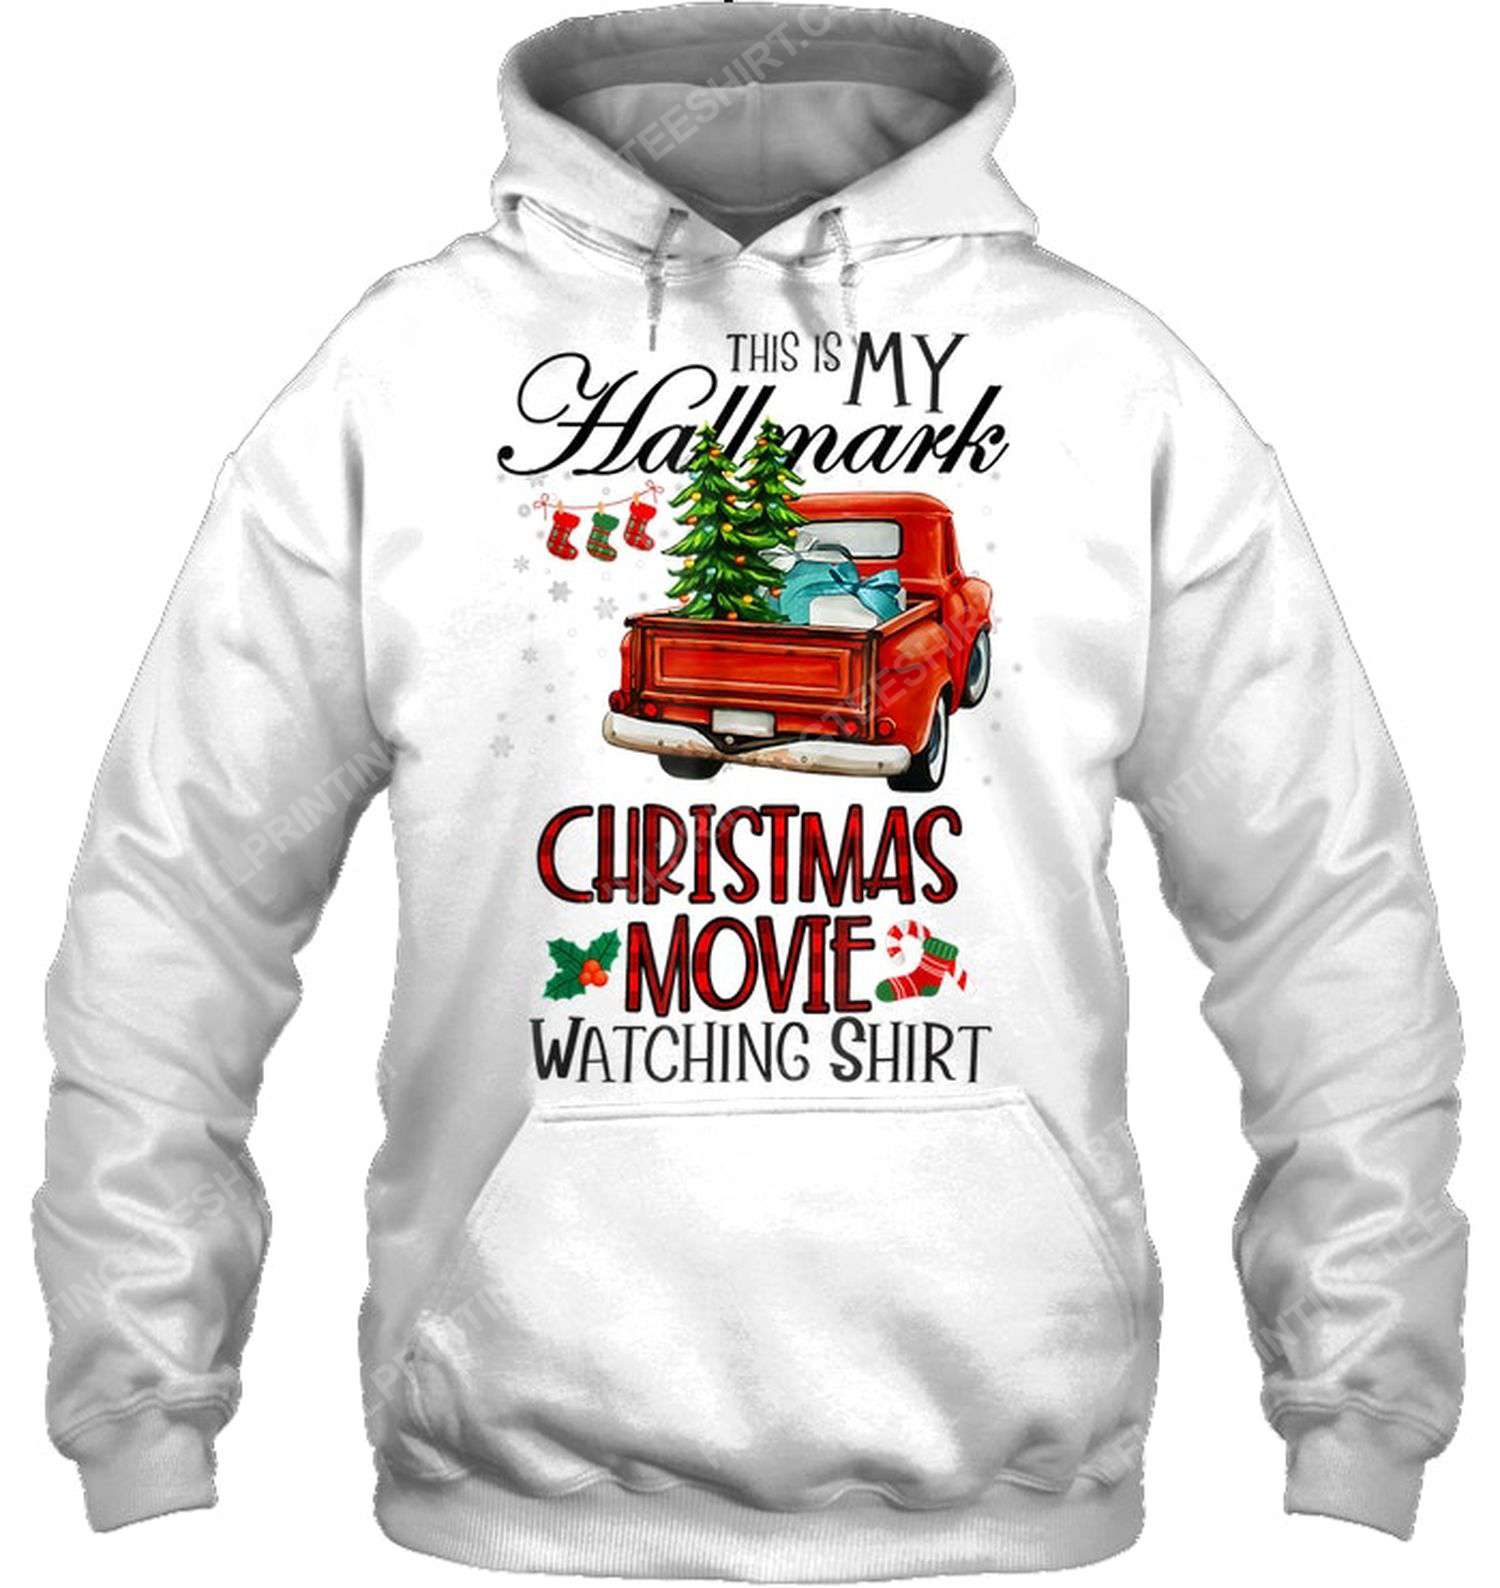 This is my hallmark christmas movie watching hoodie